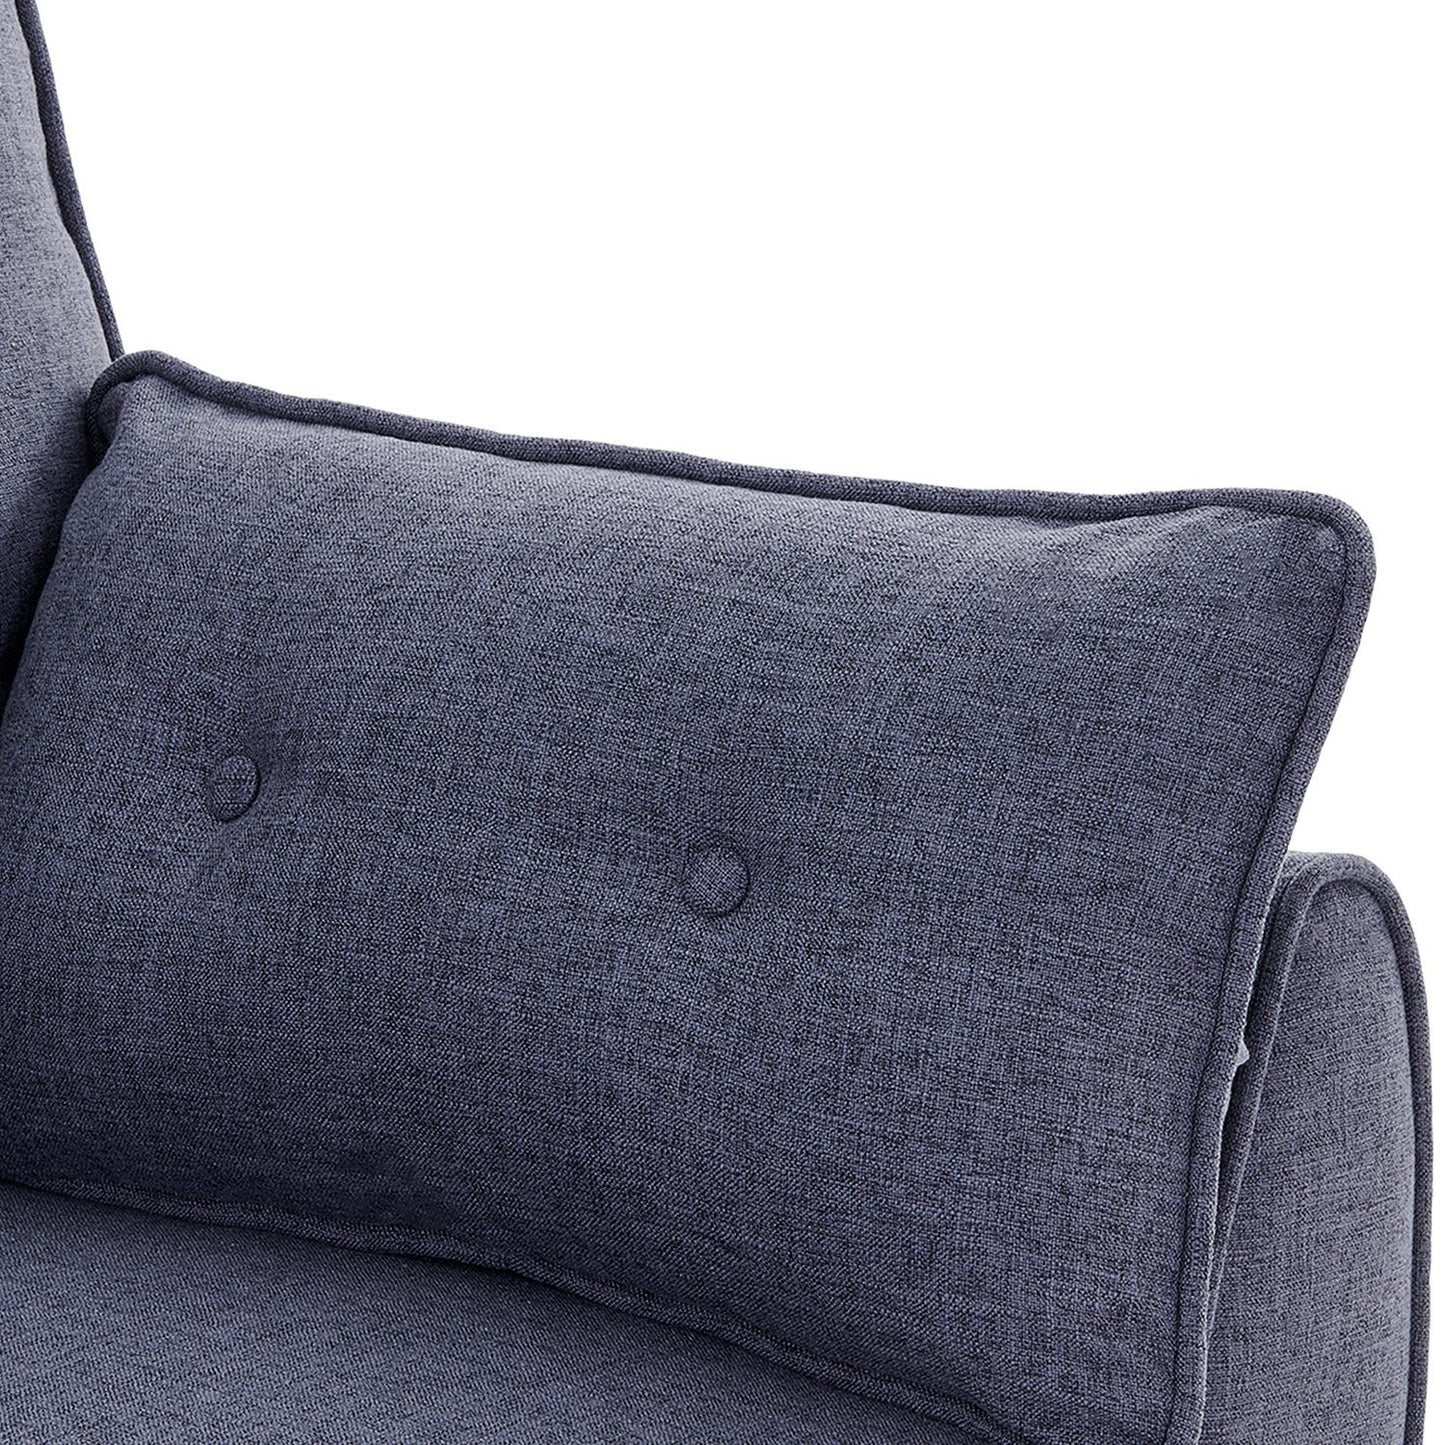 Sarantino 3 Seater Modular Linen Fabric Sofa Bed - Dark Grey